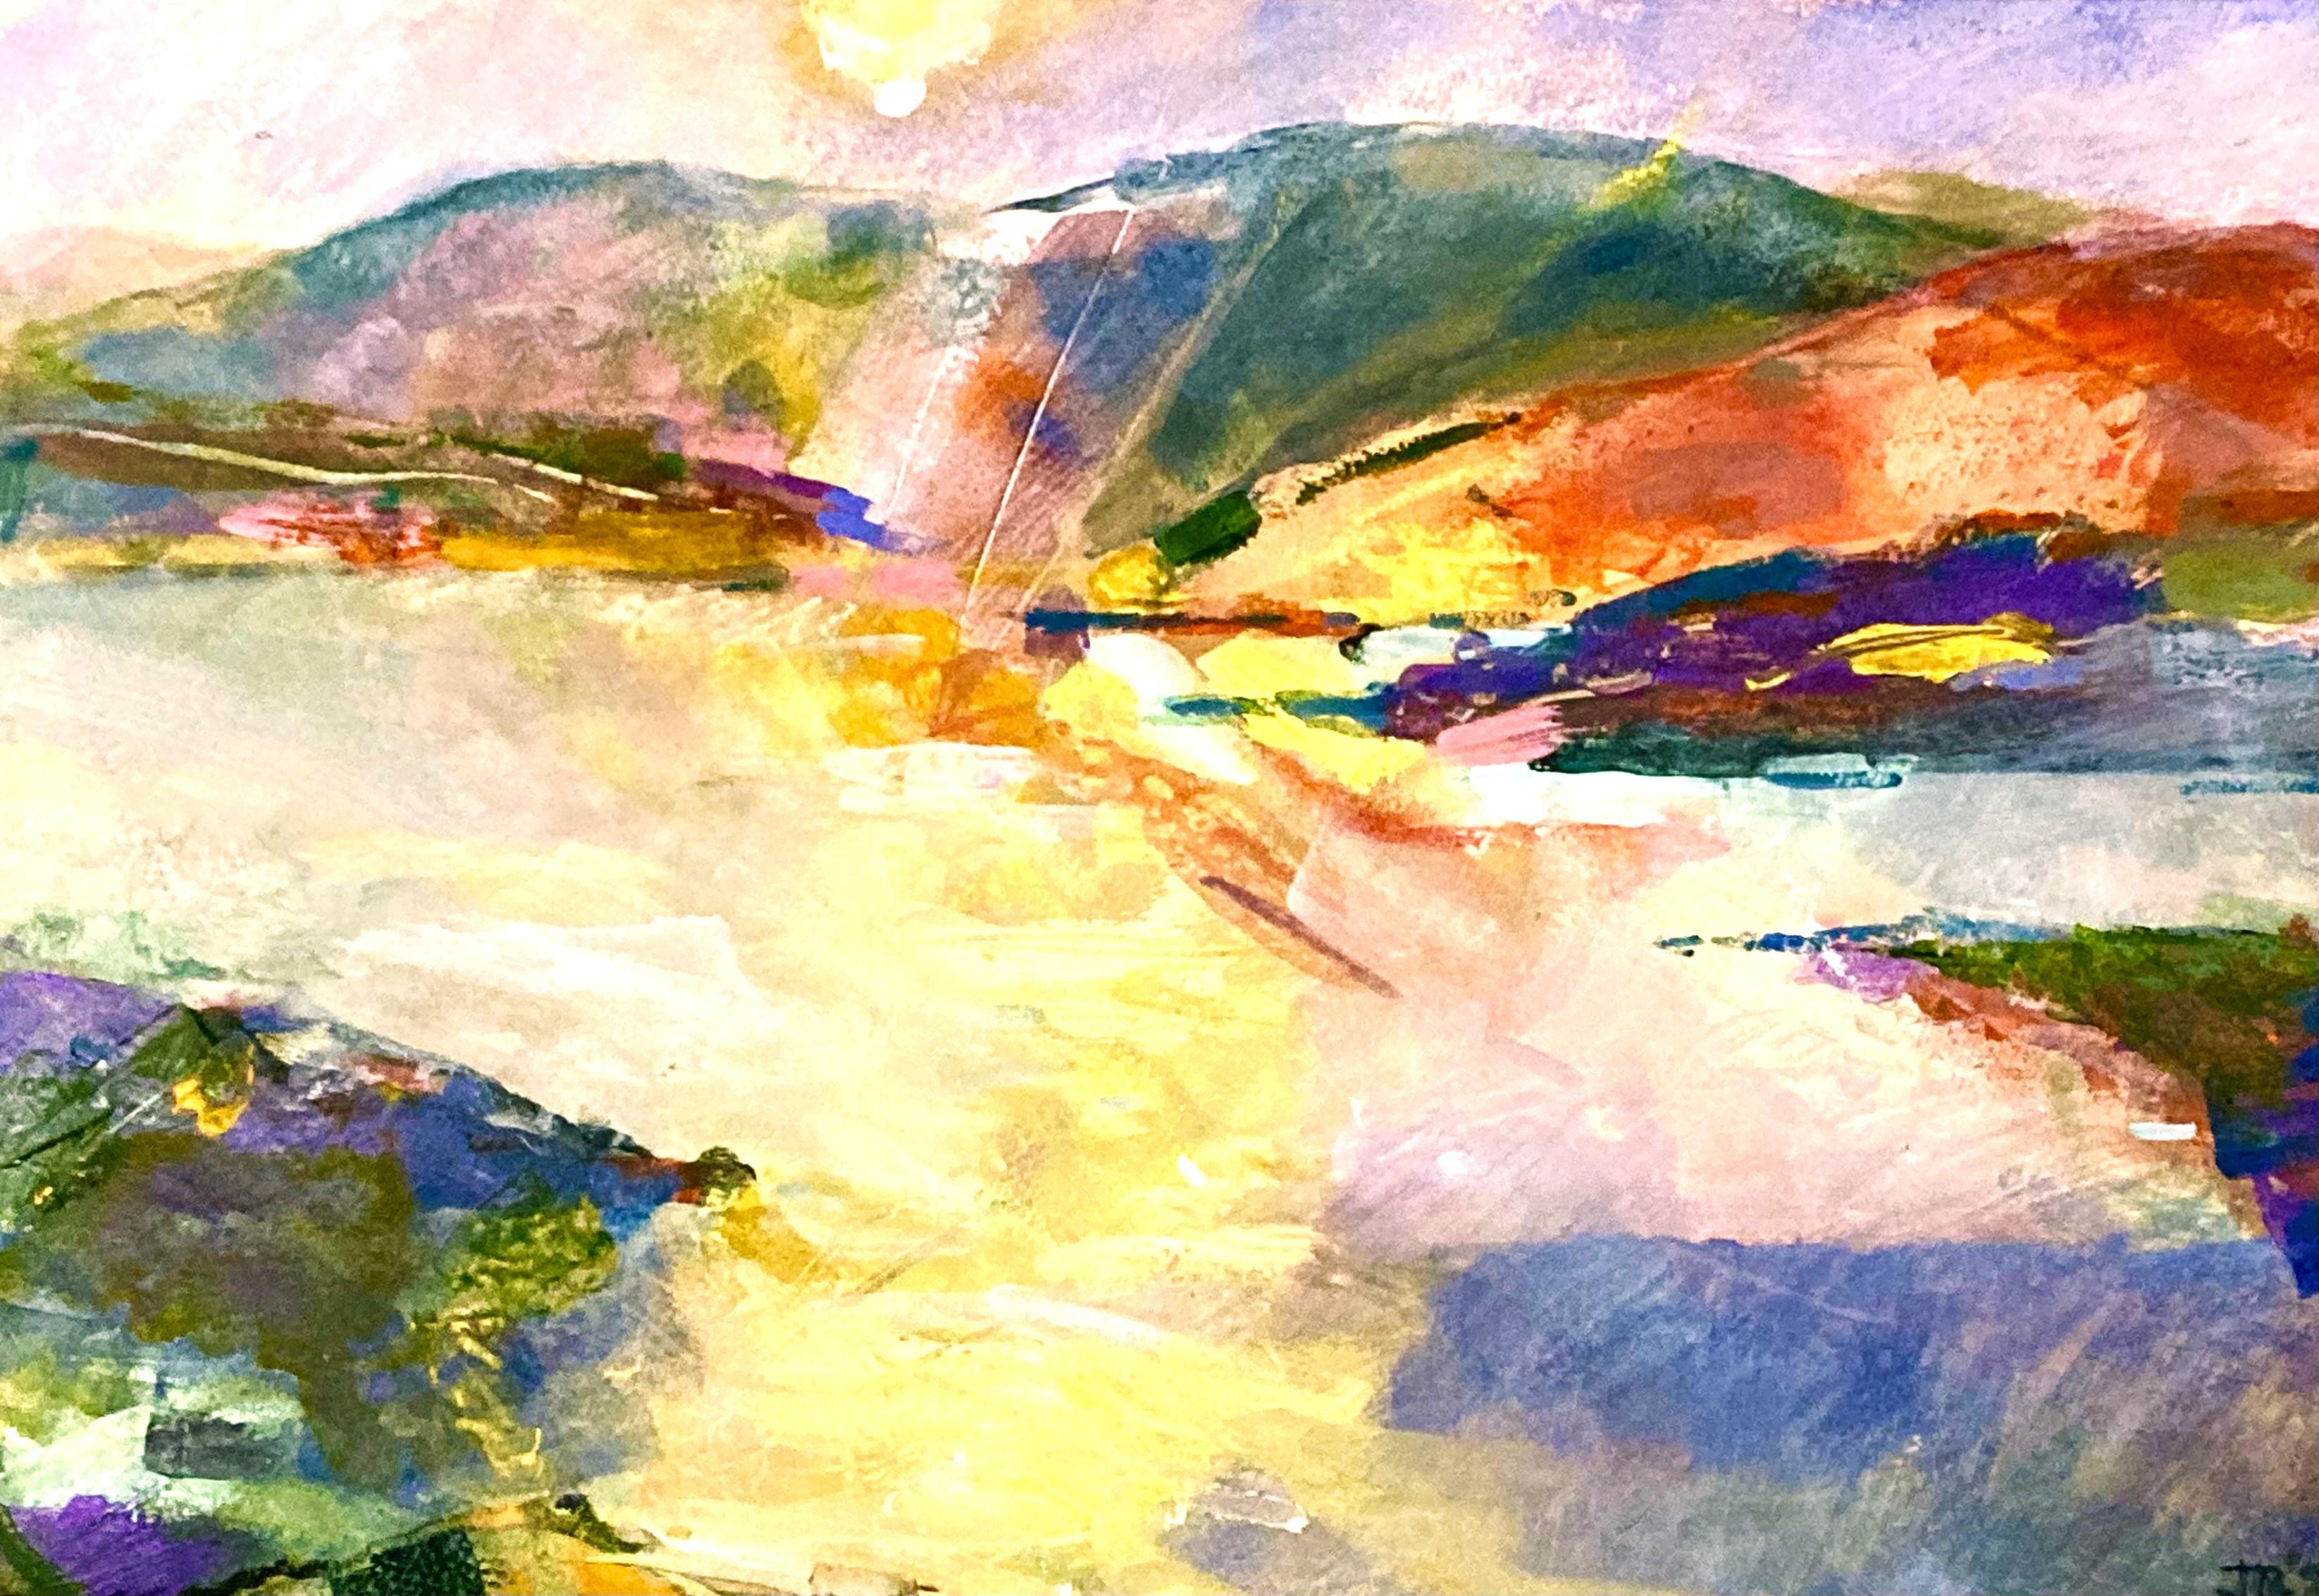 Winter Sun, Scotland, Acrylic on paper, Original Painting, Abstract art 